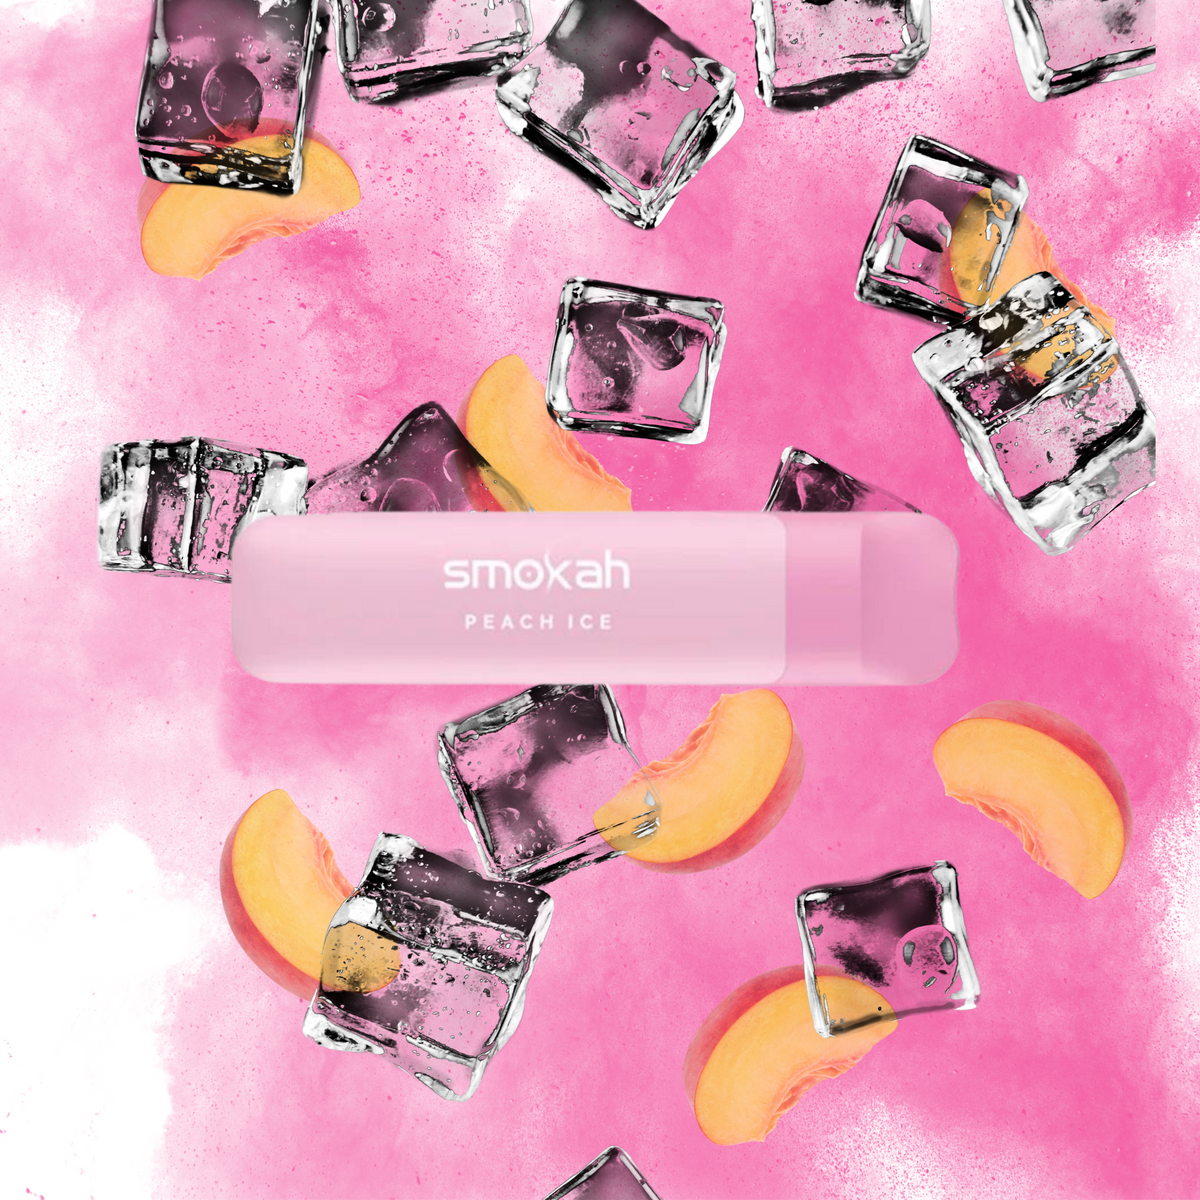 Smokah GLAMEE Peach Ice "Pfirsich Eis" 10er Packung / Display (Sparset)